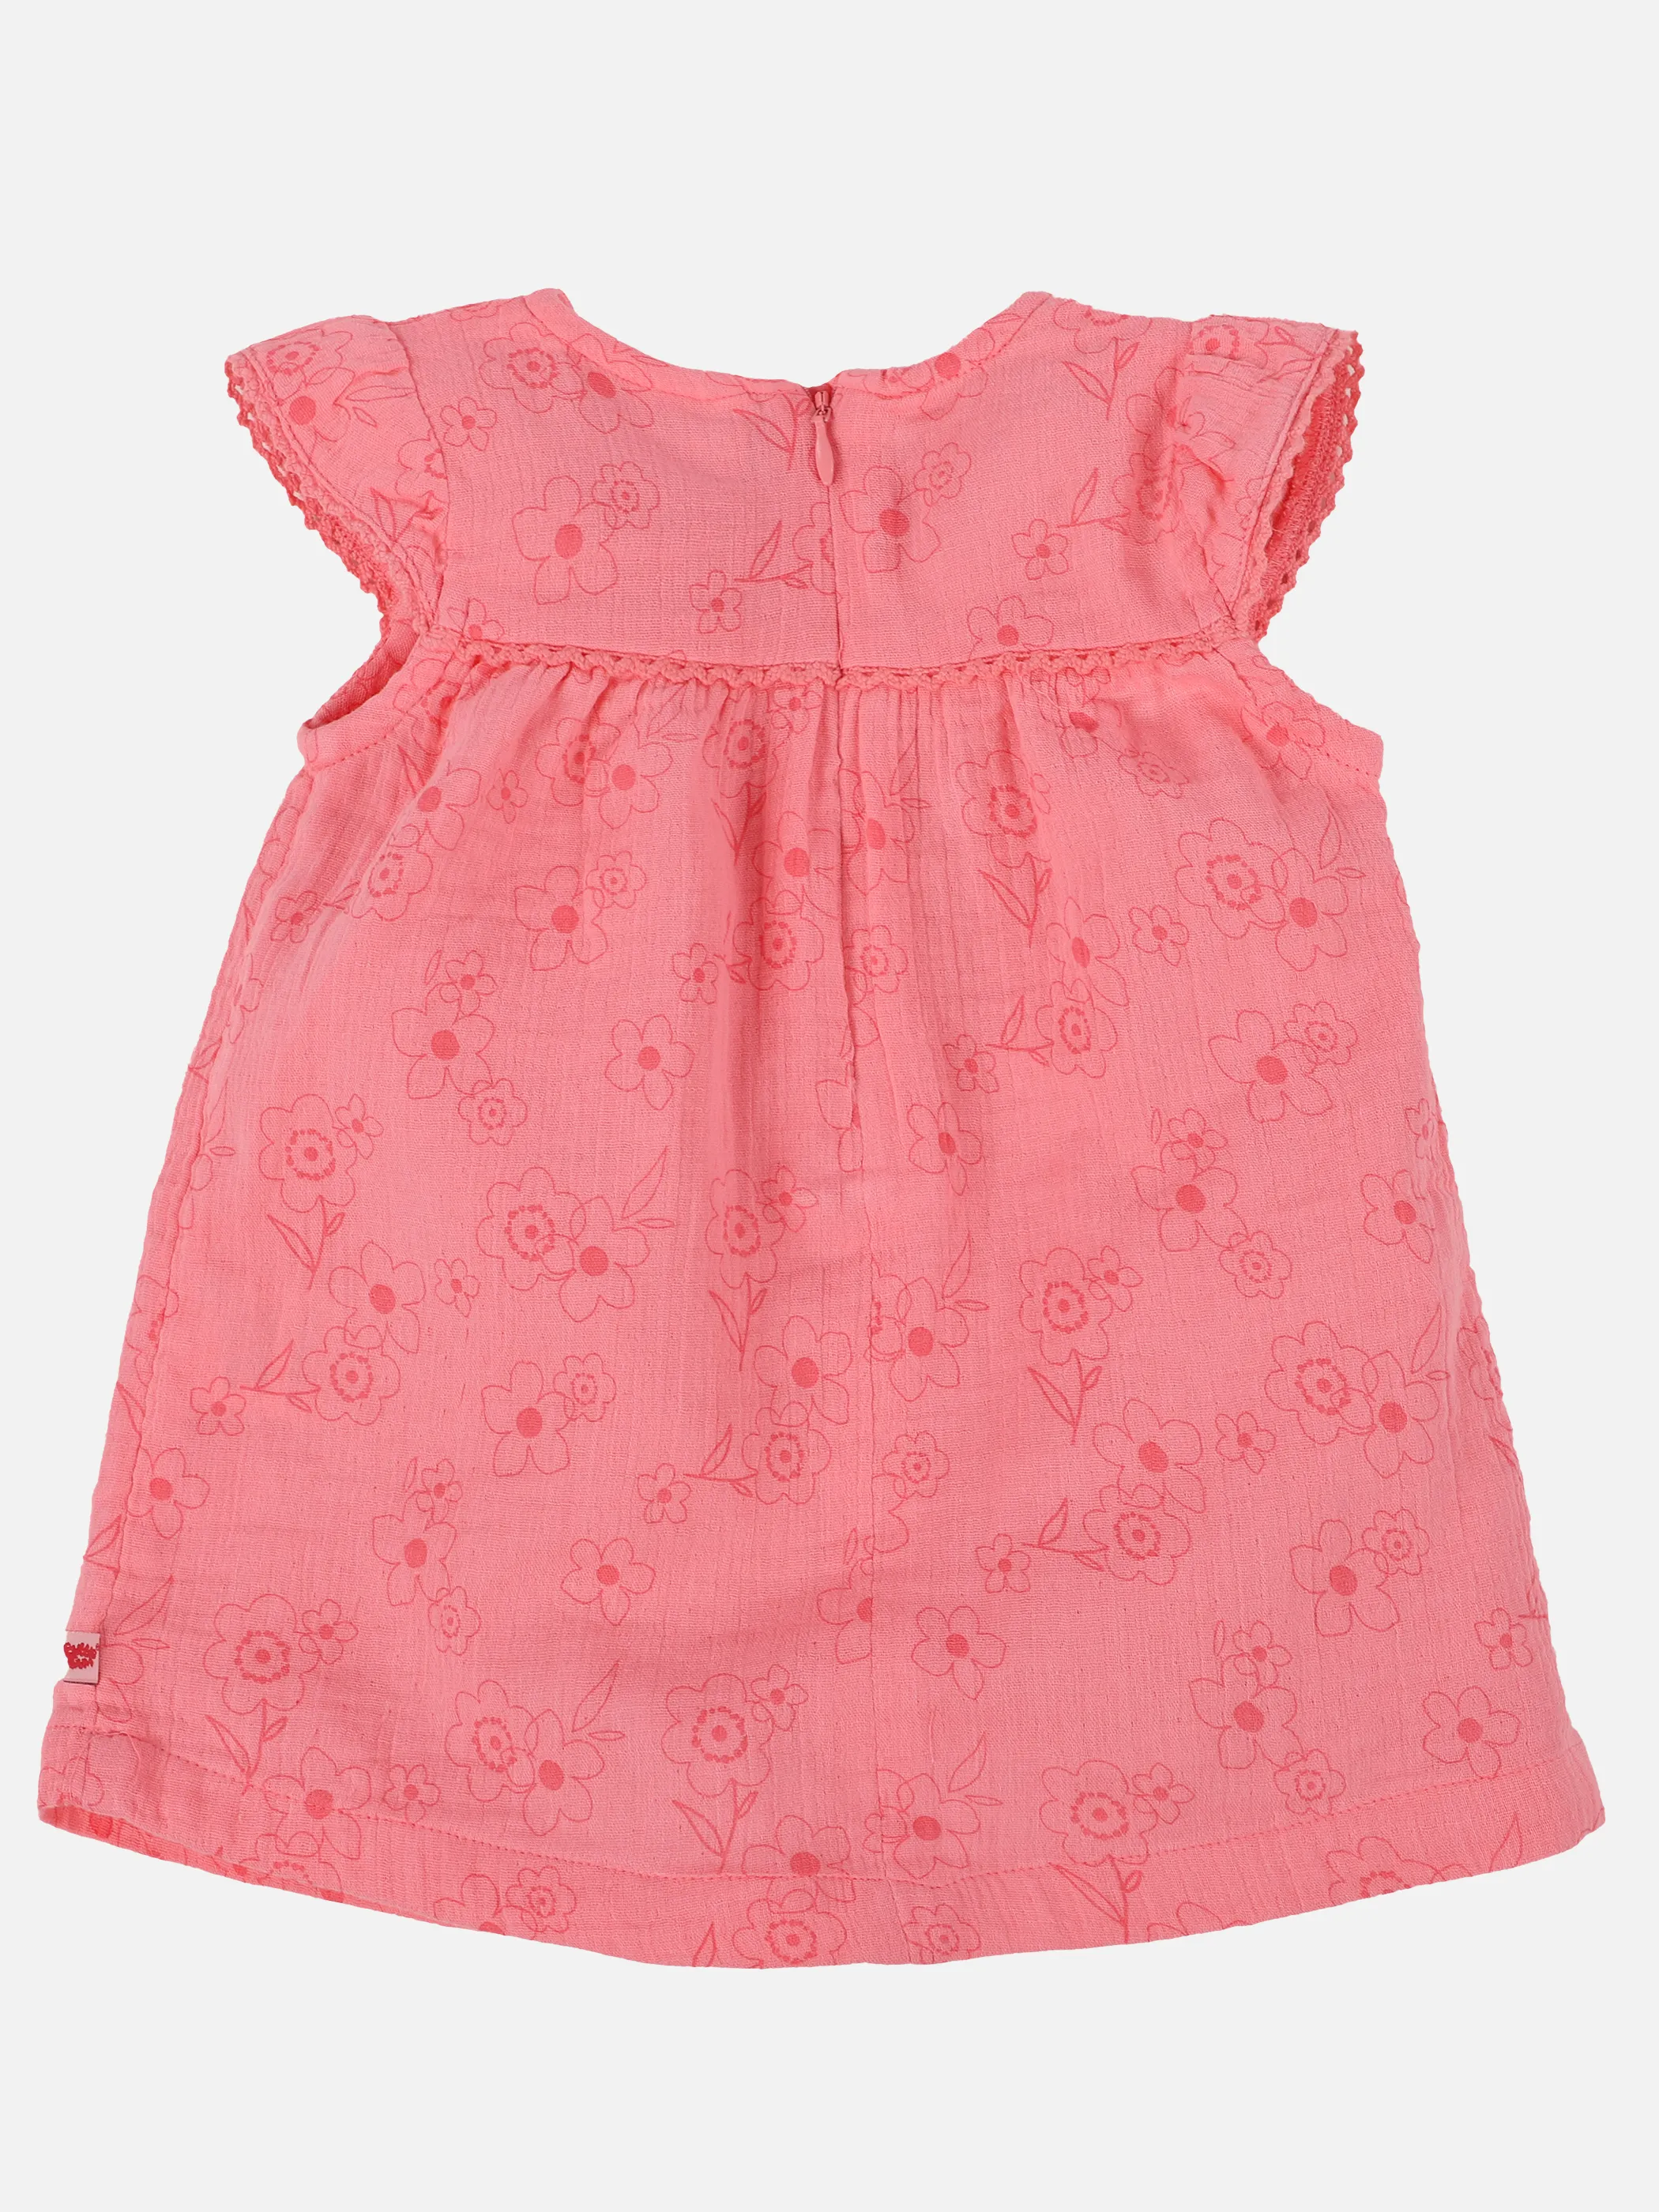 Bubble Gum BM gewebtes Kleid mit AOP in Pink Pink 892517 PINK 2